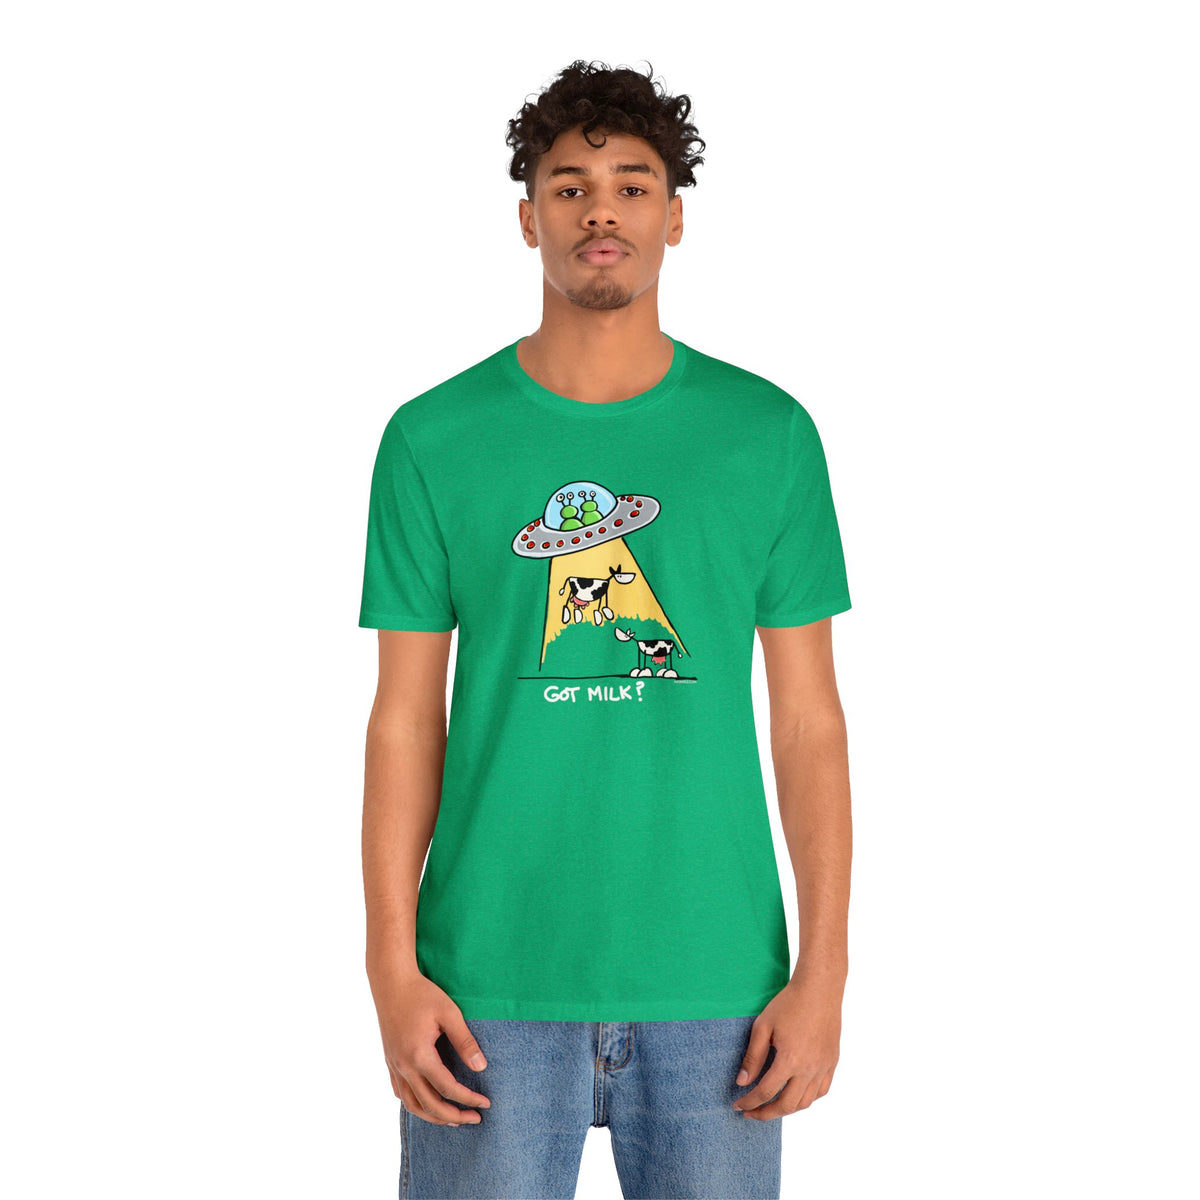 Got M*lk? UFO abducting dairy cows Unisex Soft Cotton T-Shirt